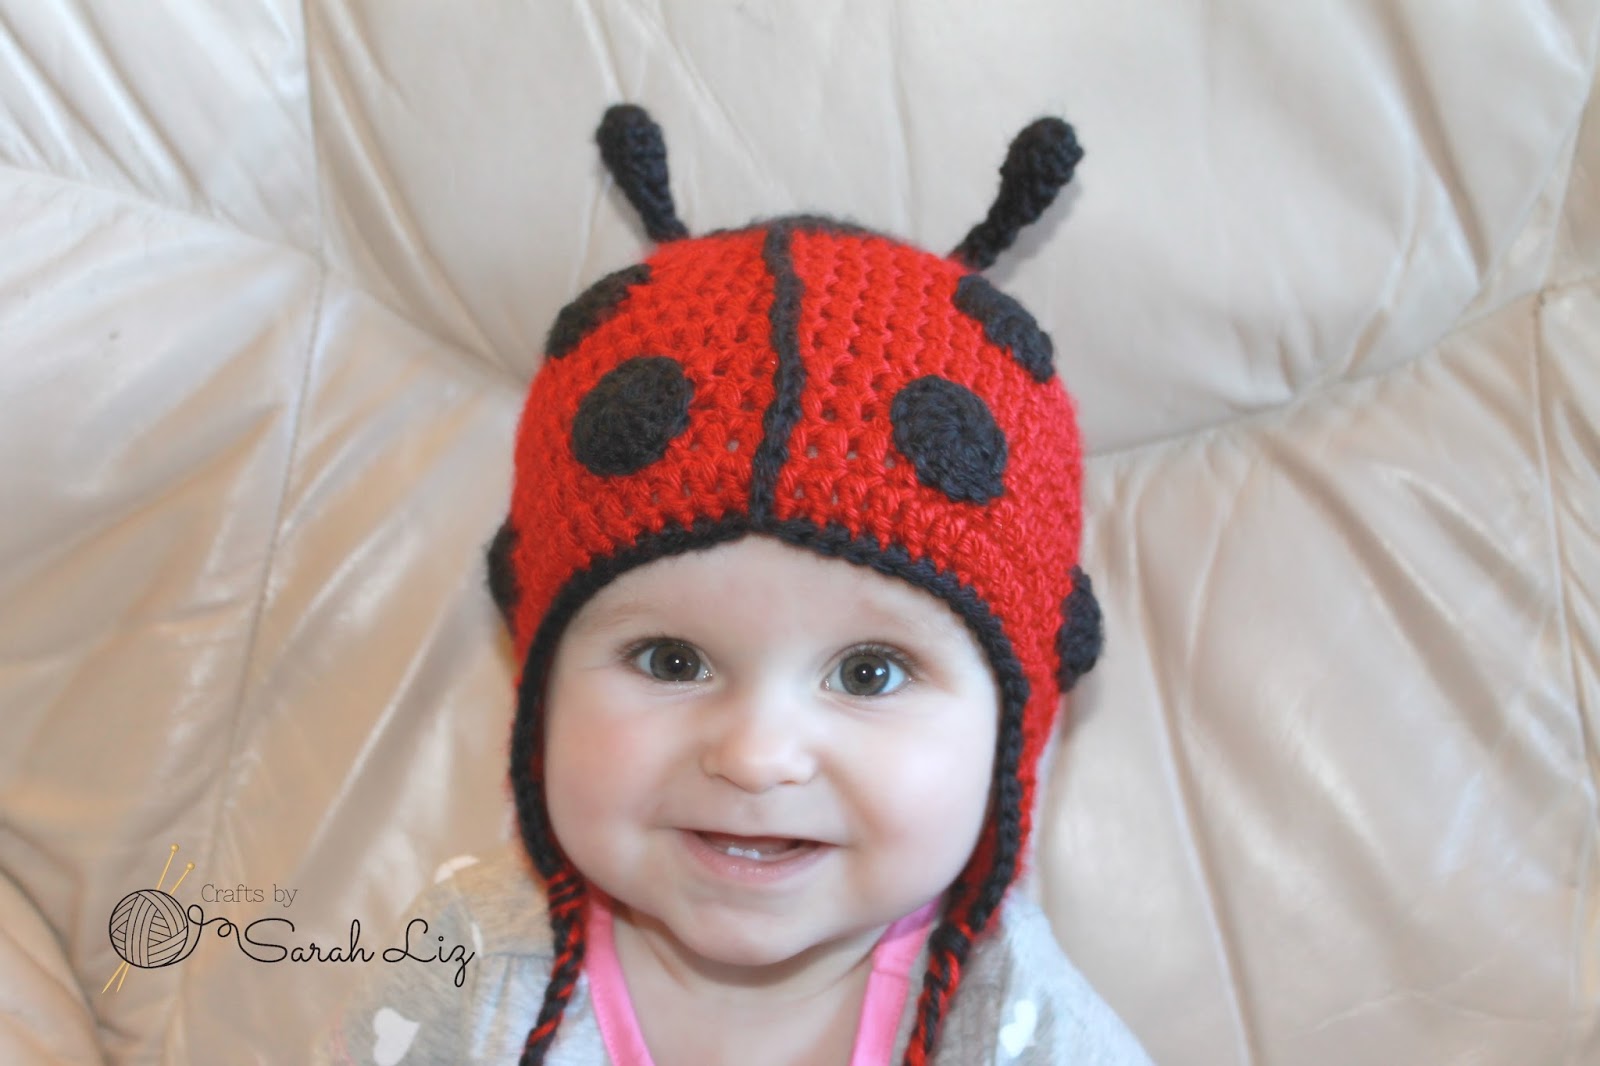 Crafts By Sarah Liz: Ladybug Hat - Free Crochet Pattern